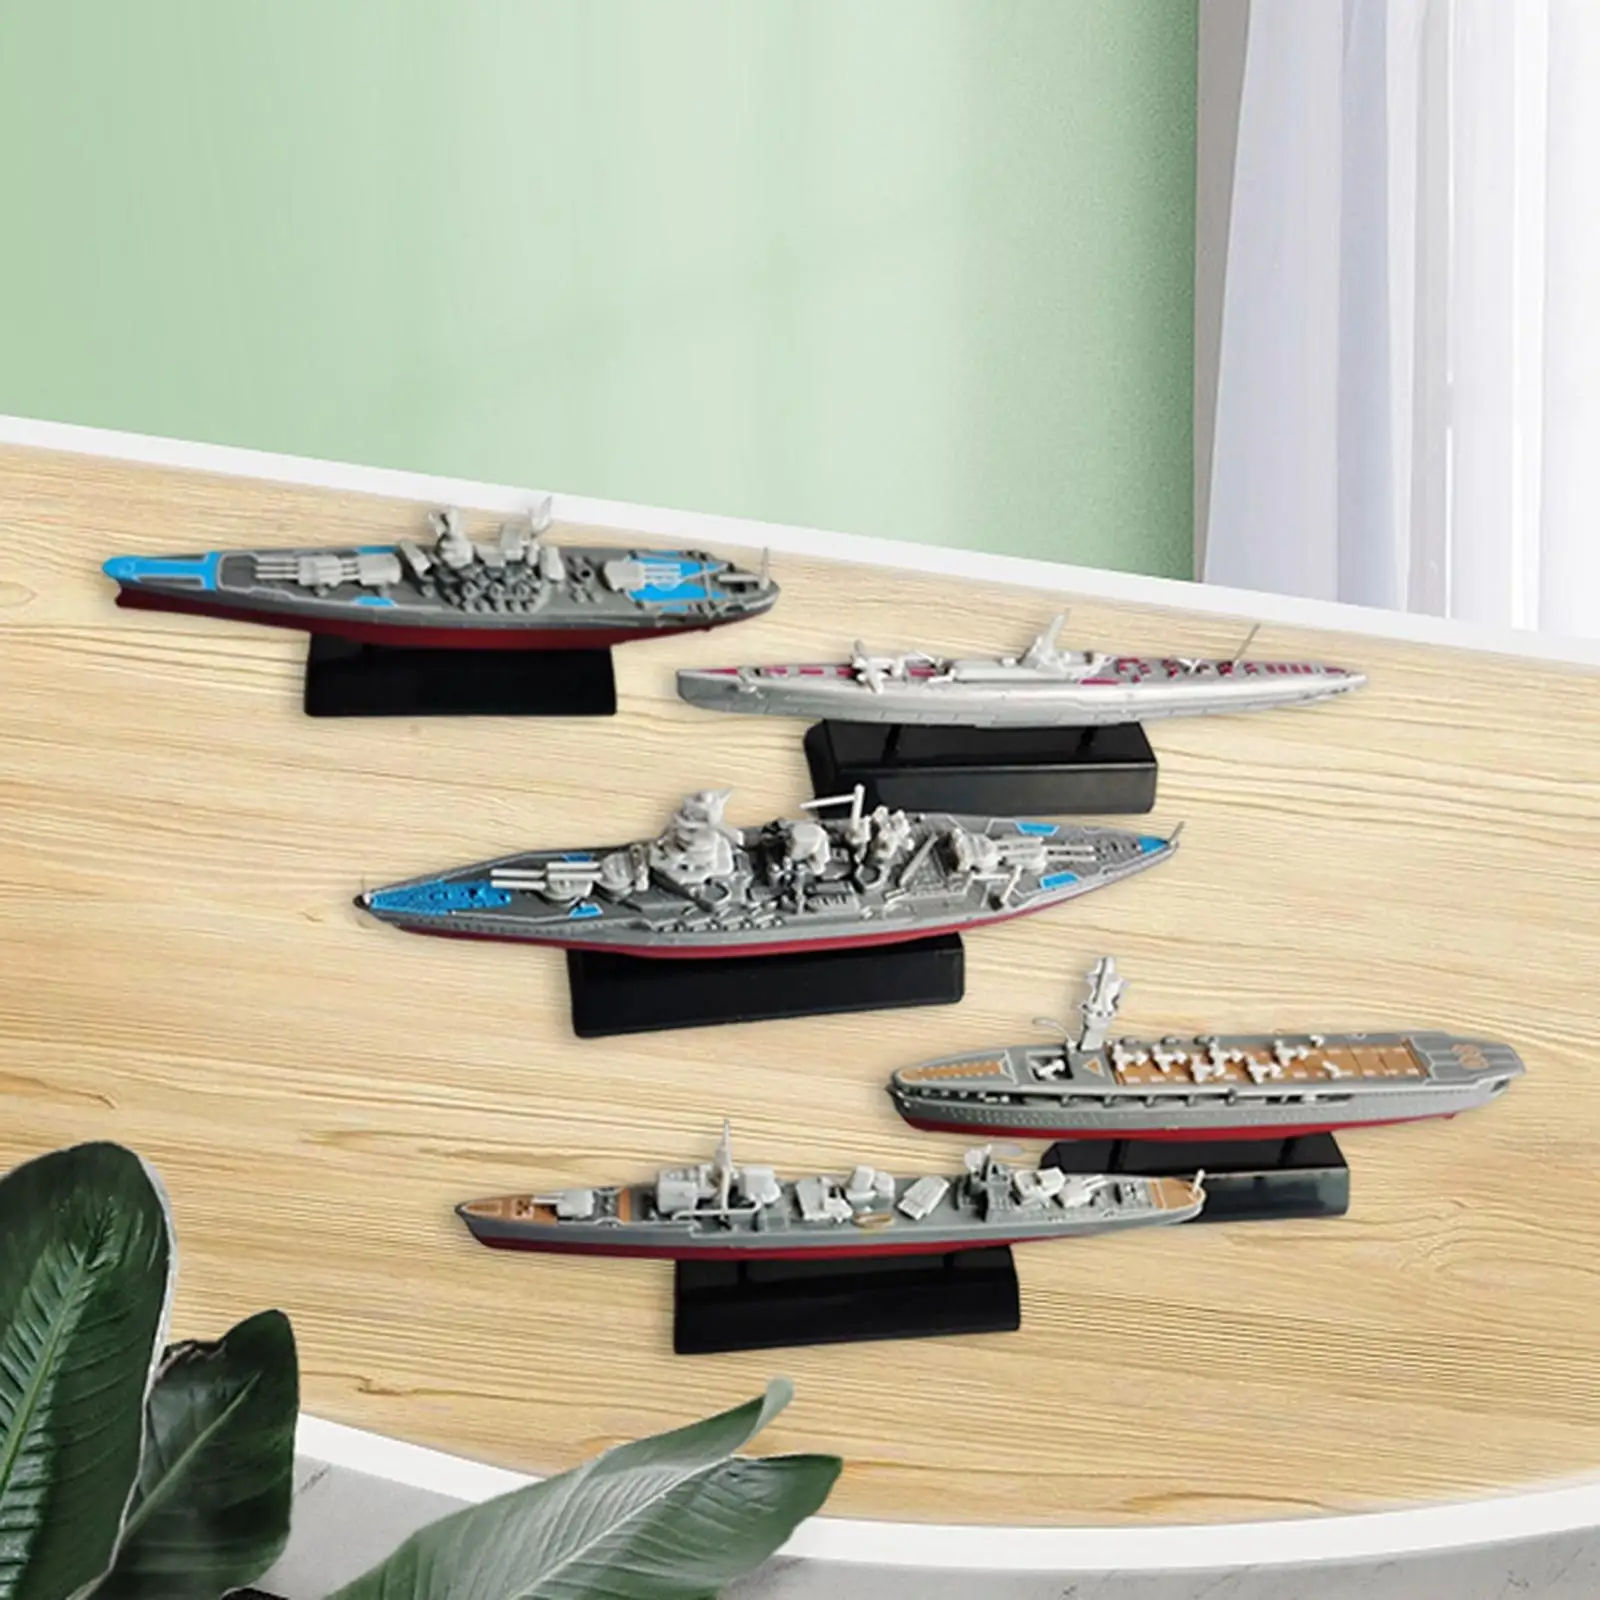 5 Pieces Simulation Warship Toys Collection Decoration Watercraft Model Navy Ship for Office Desk Desktop Adult Kids Children